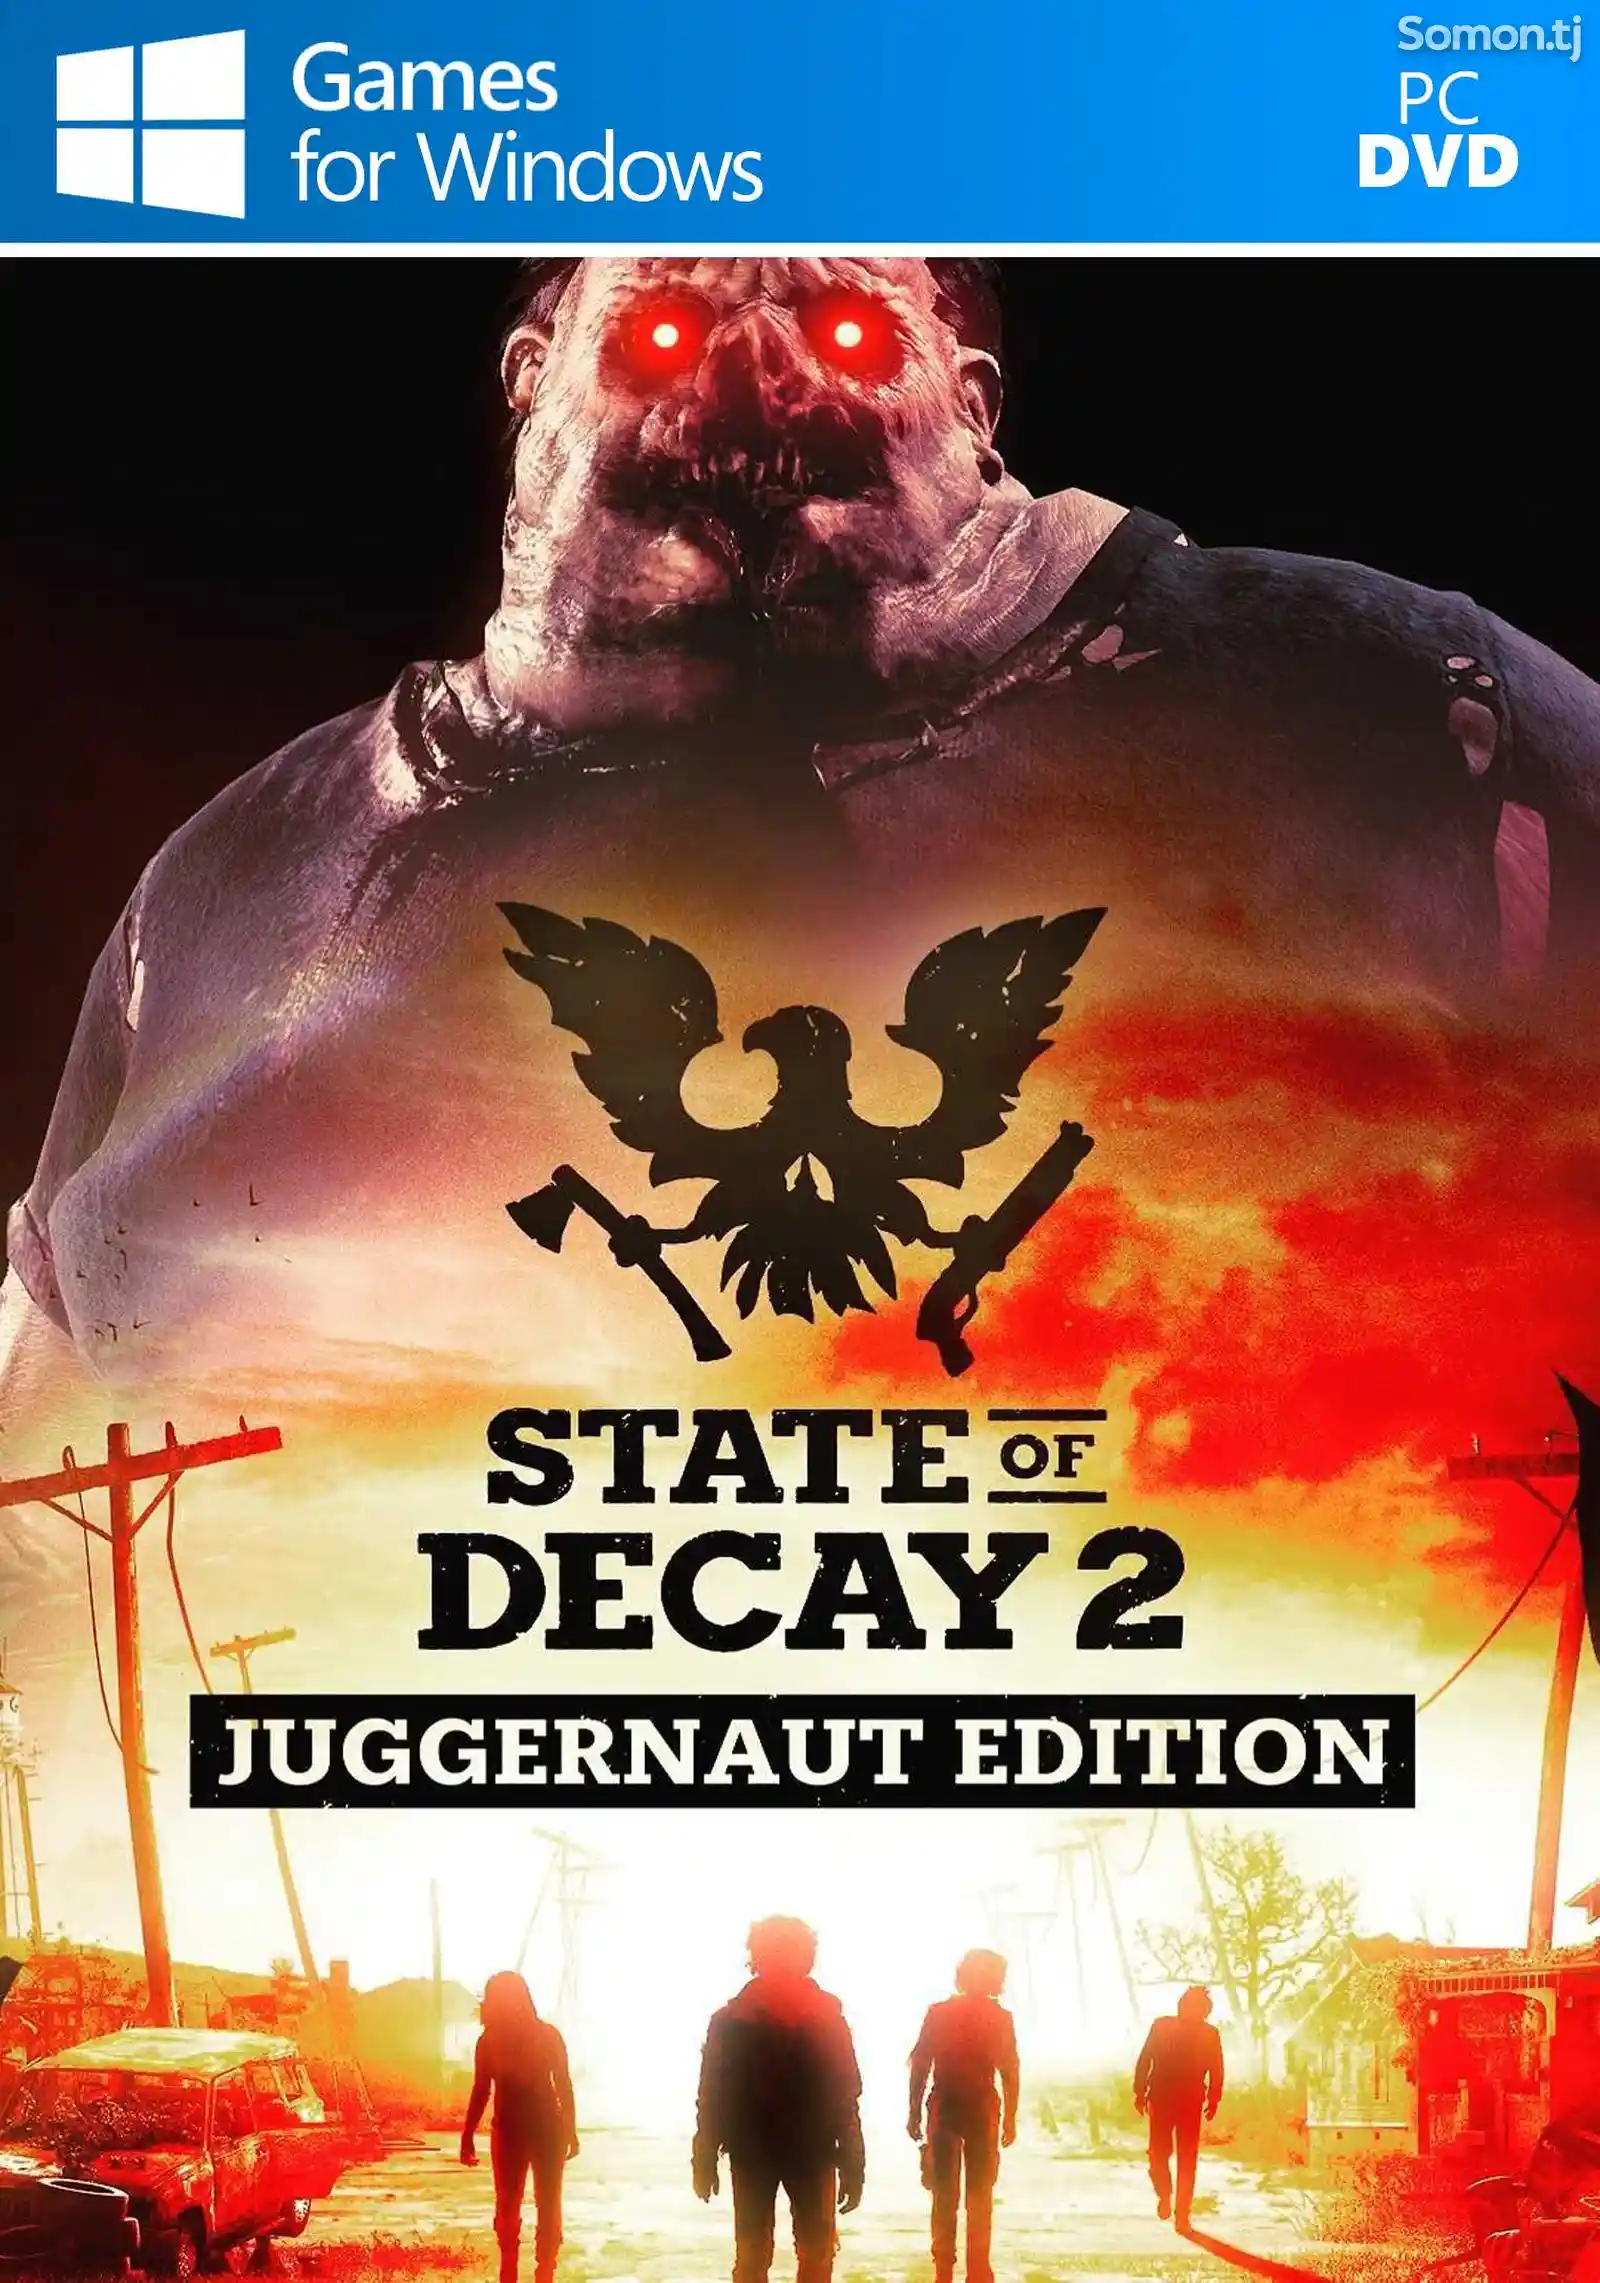 Игра State of decay 2 juggernaut для компьютера-пк-pc-1